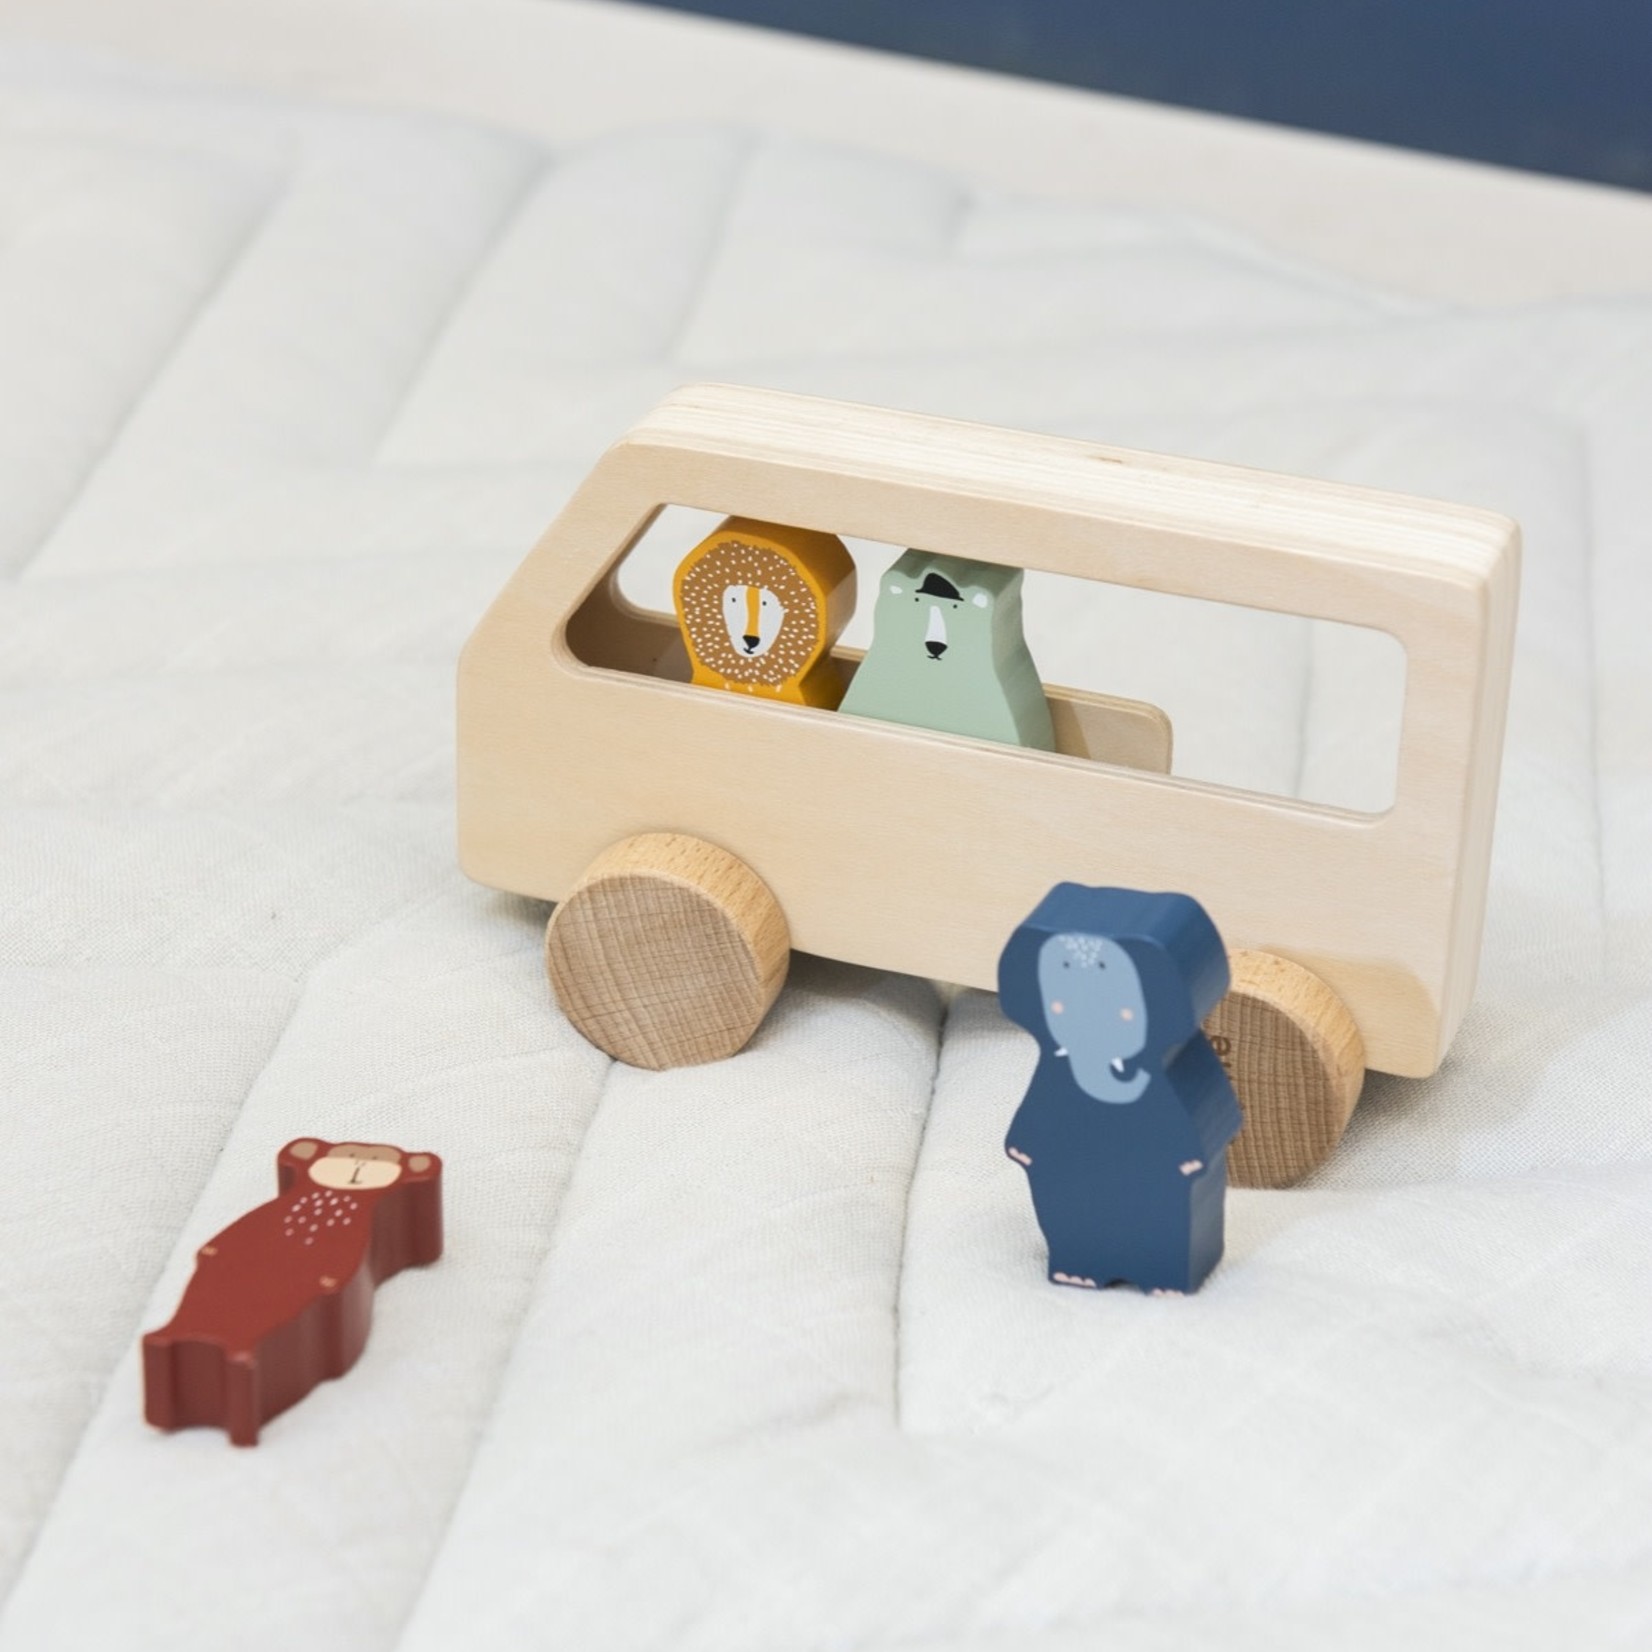 Trixie Wooden animal bus - 12 cm x 18 cm x 6 cm